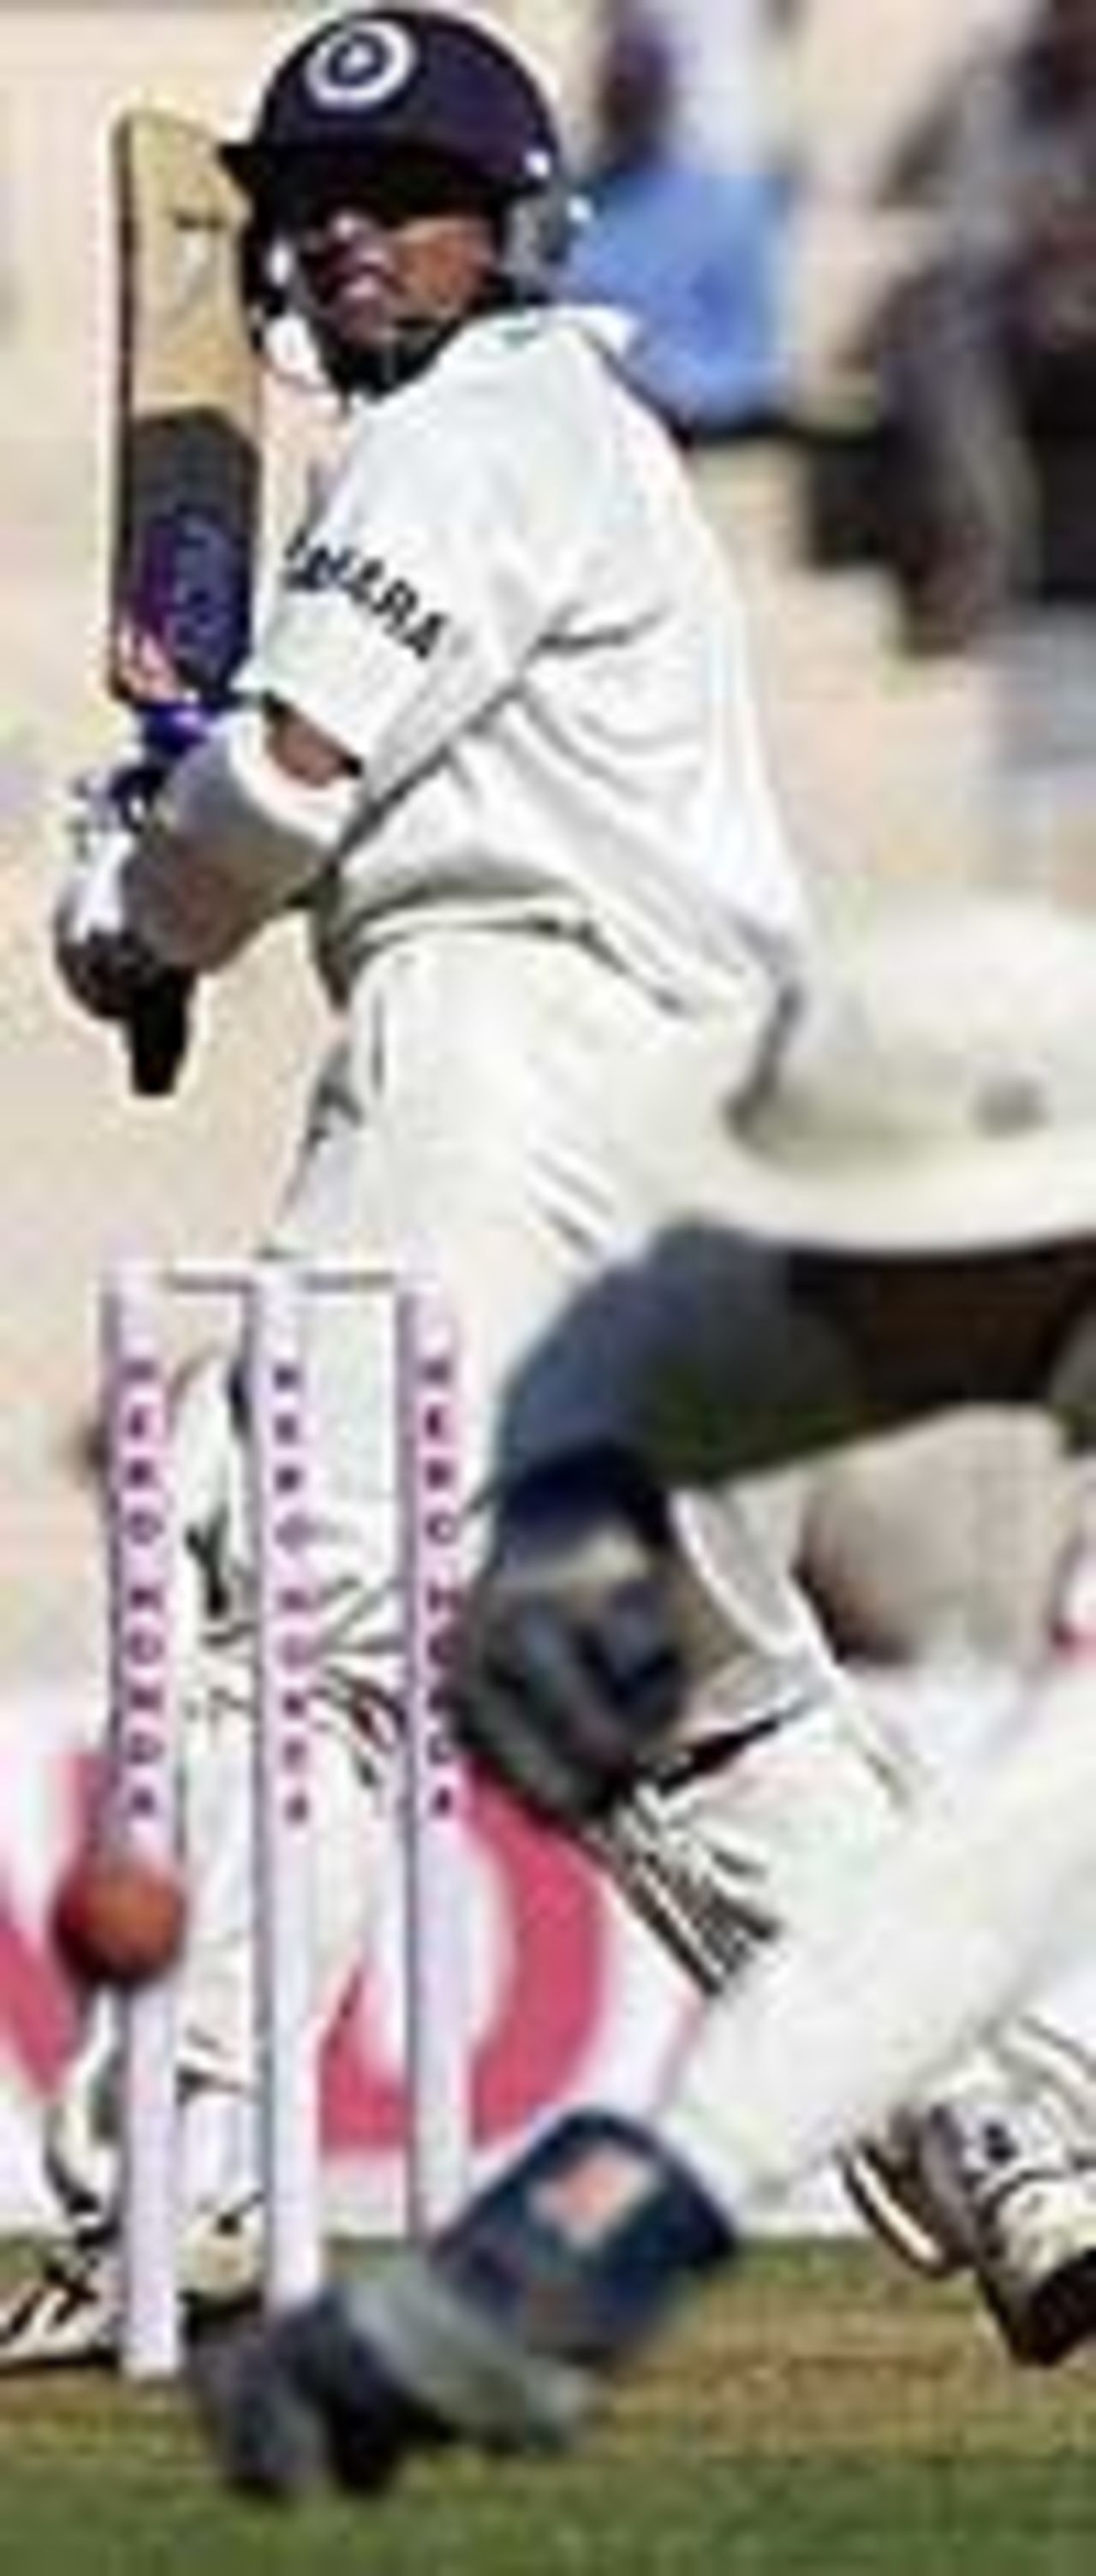 India v England, 2nd Test match , Ahmedabad, 11-15 December 2001